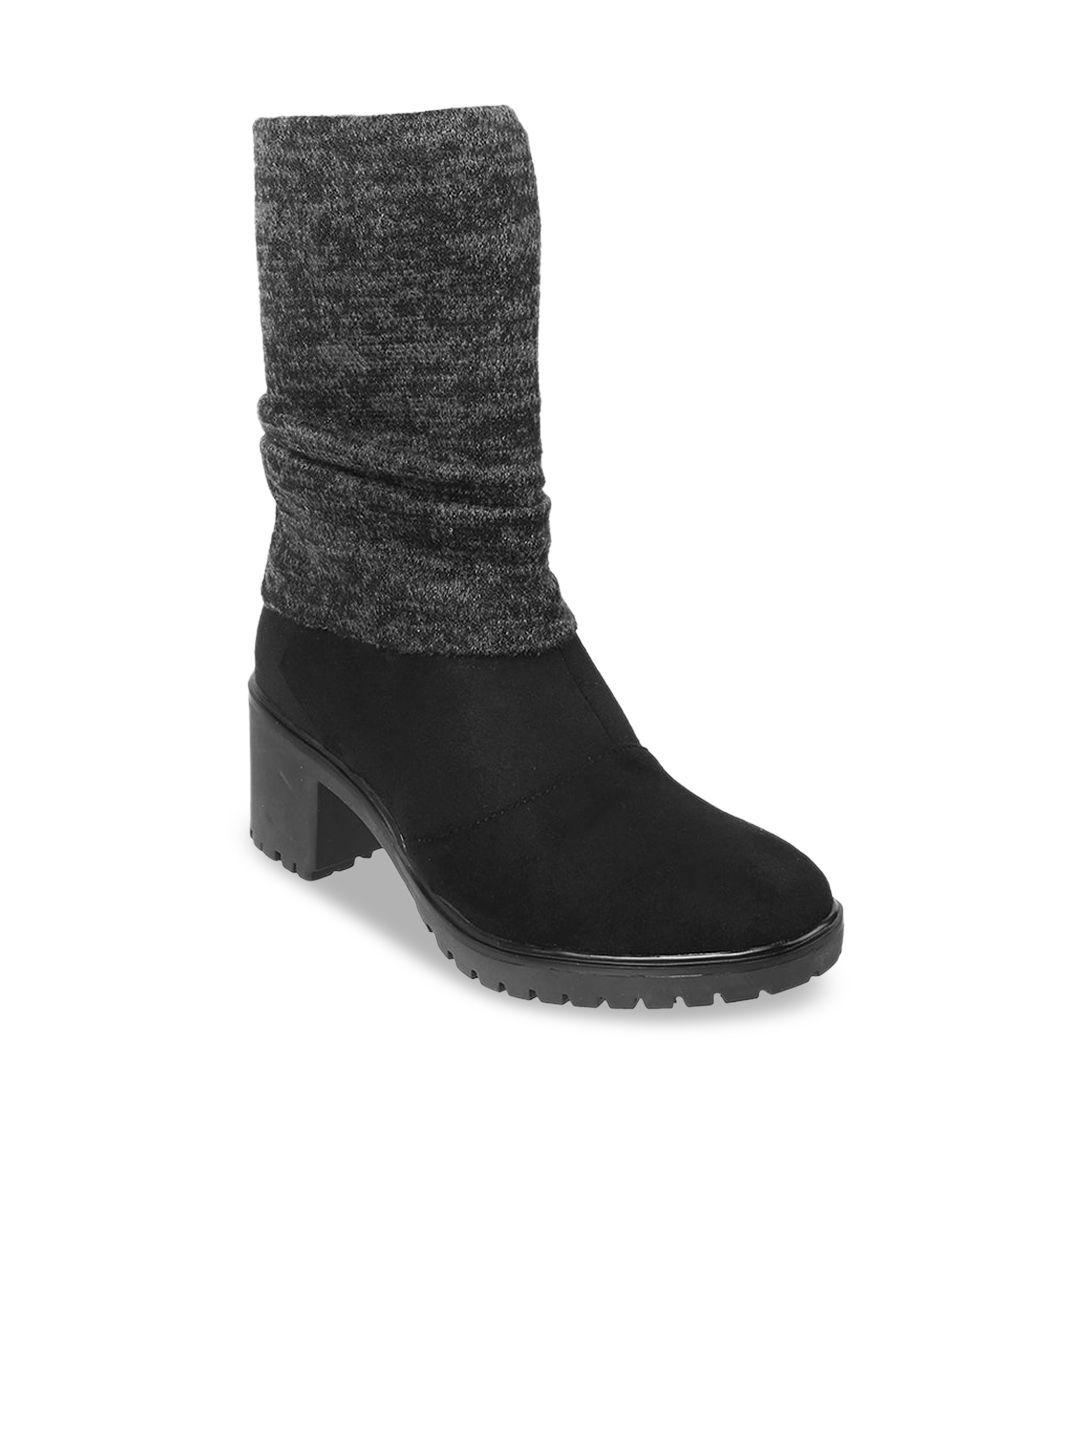 mochi-black-block-heeled-boots